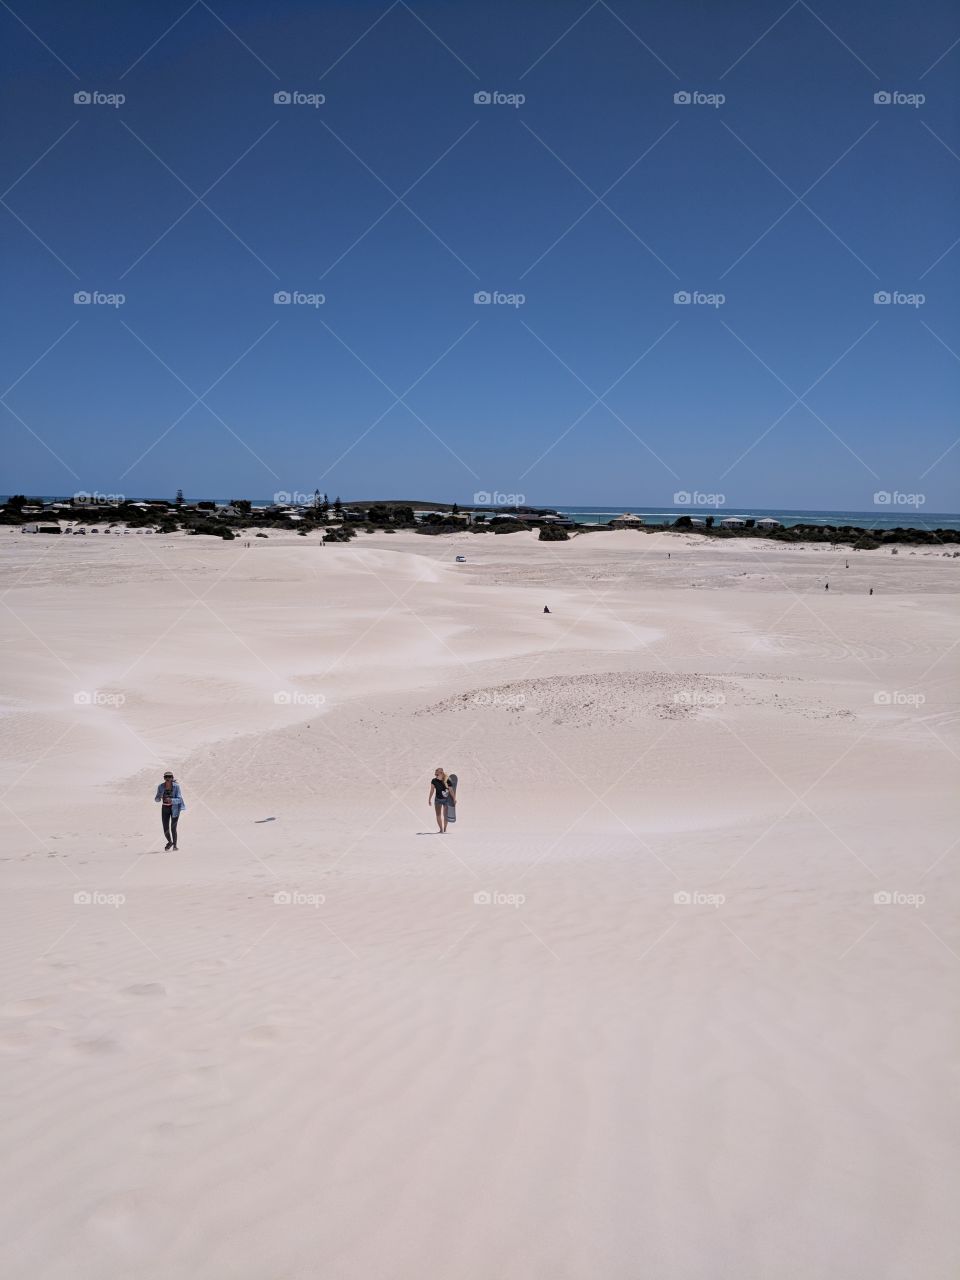 Sandboarding on the sand dunes in Lancelin, Western Australia